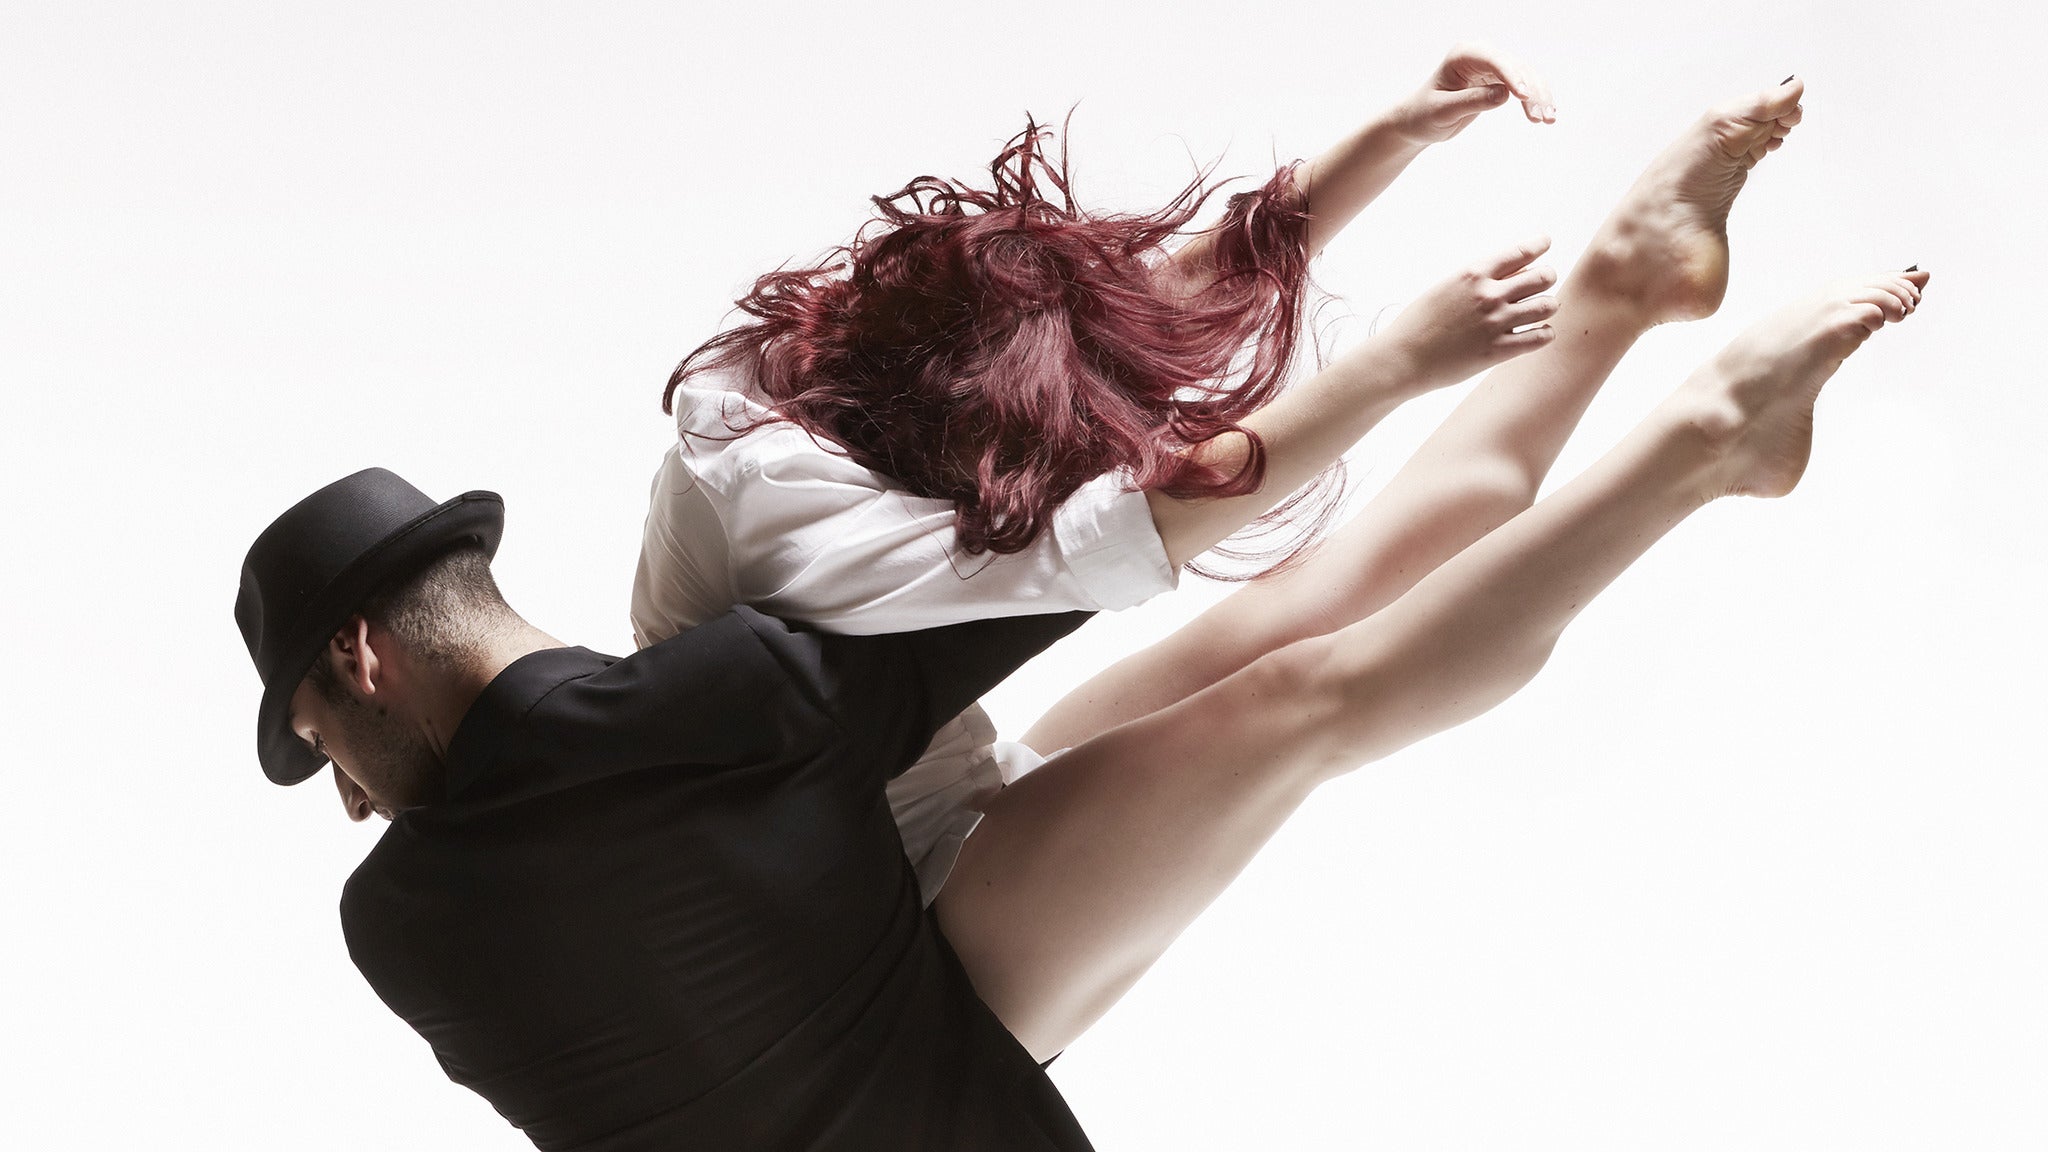 Les Ballets Jazz de Montreal: Dance Me in Toronto promo photo for CTT Insider presale offer code